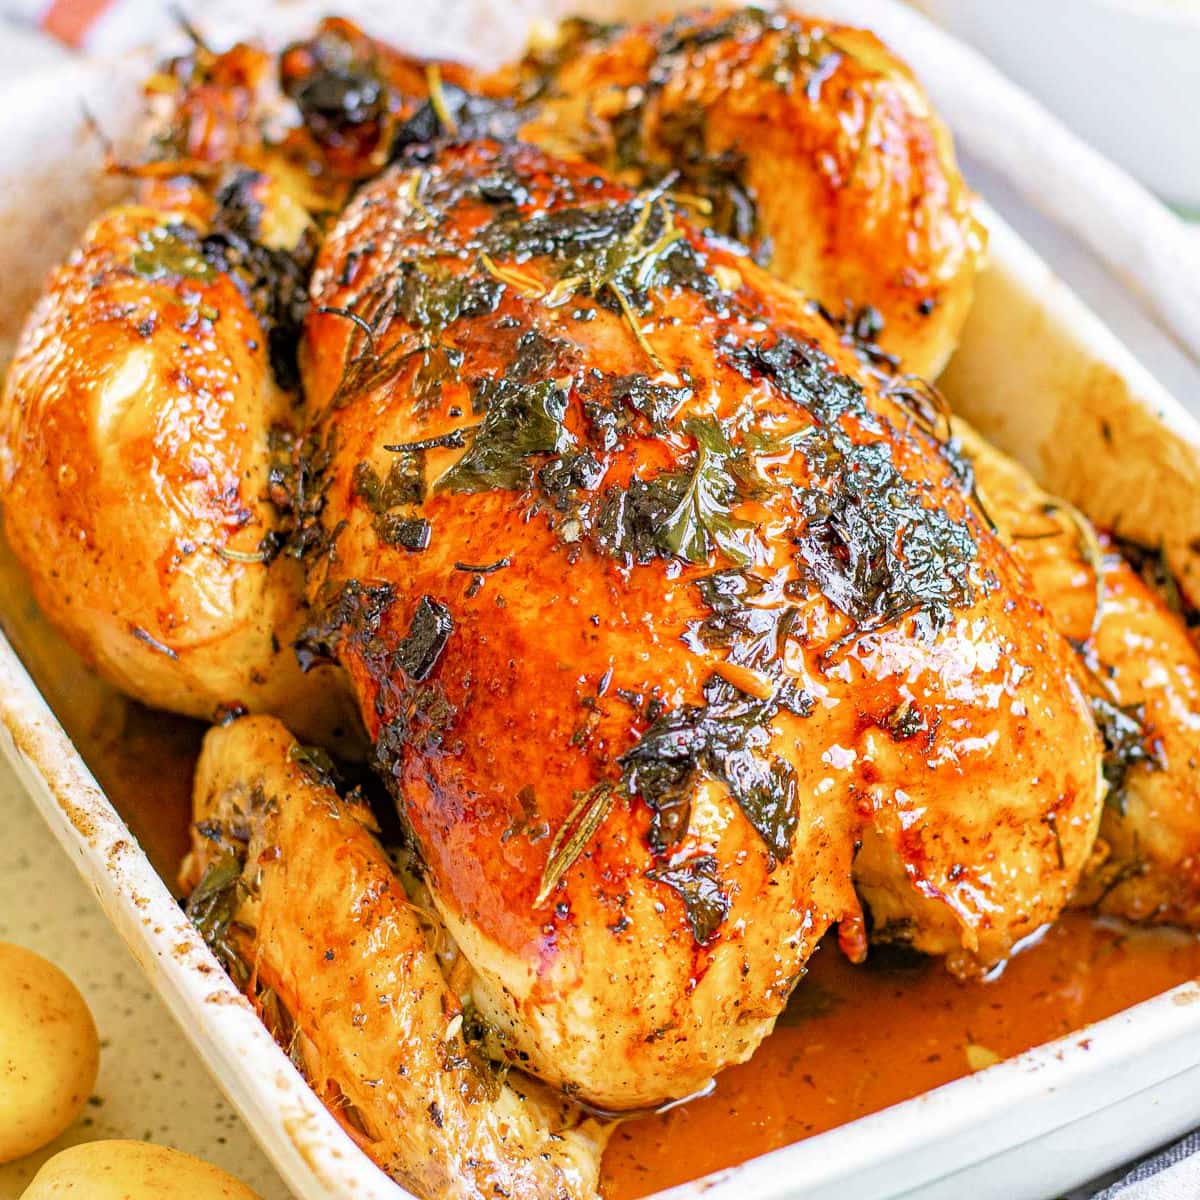 https://www.momontimeout.com/wp-content/uploads/2021/09/whole-roast-chicken-recipe-square.jpeg